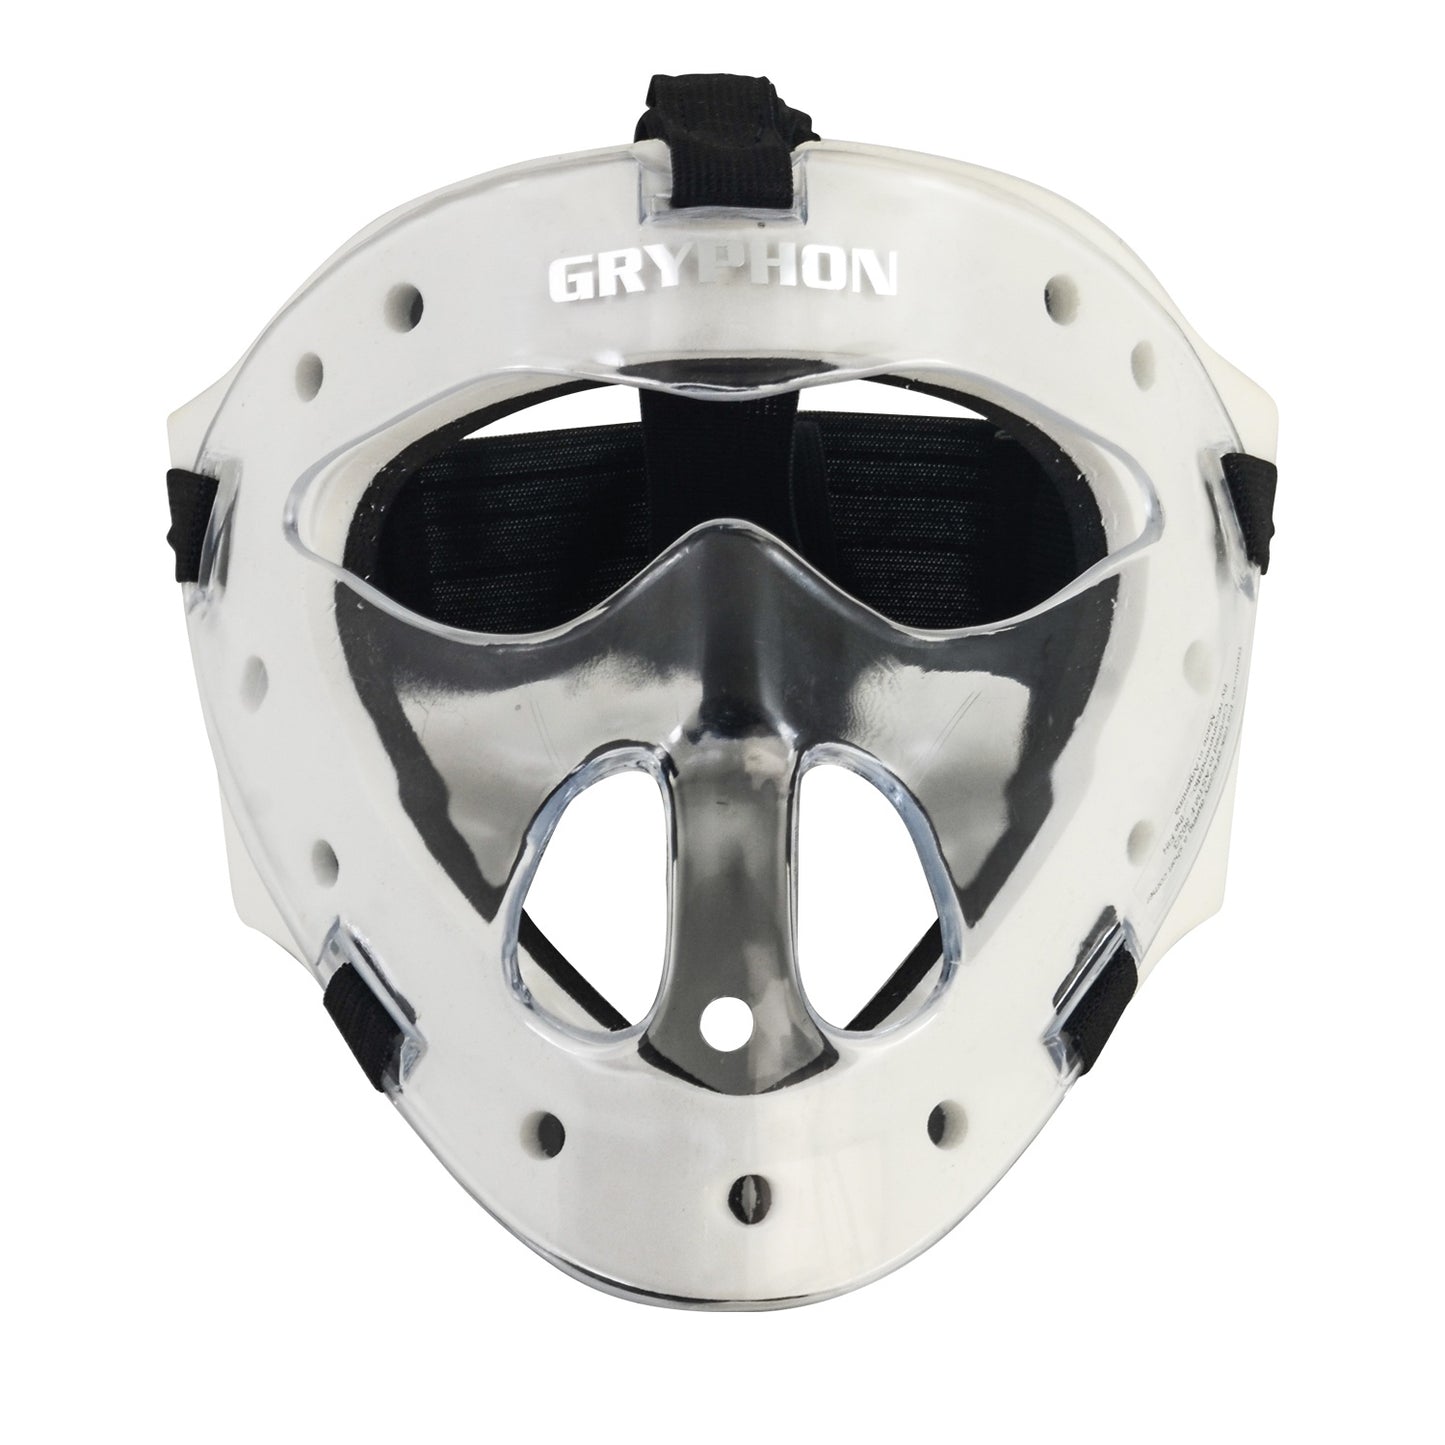 Gryphon Defenders Mask